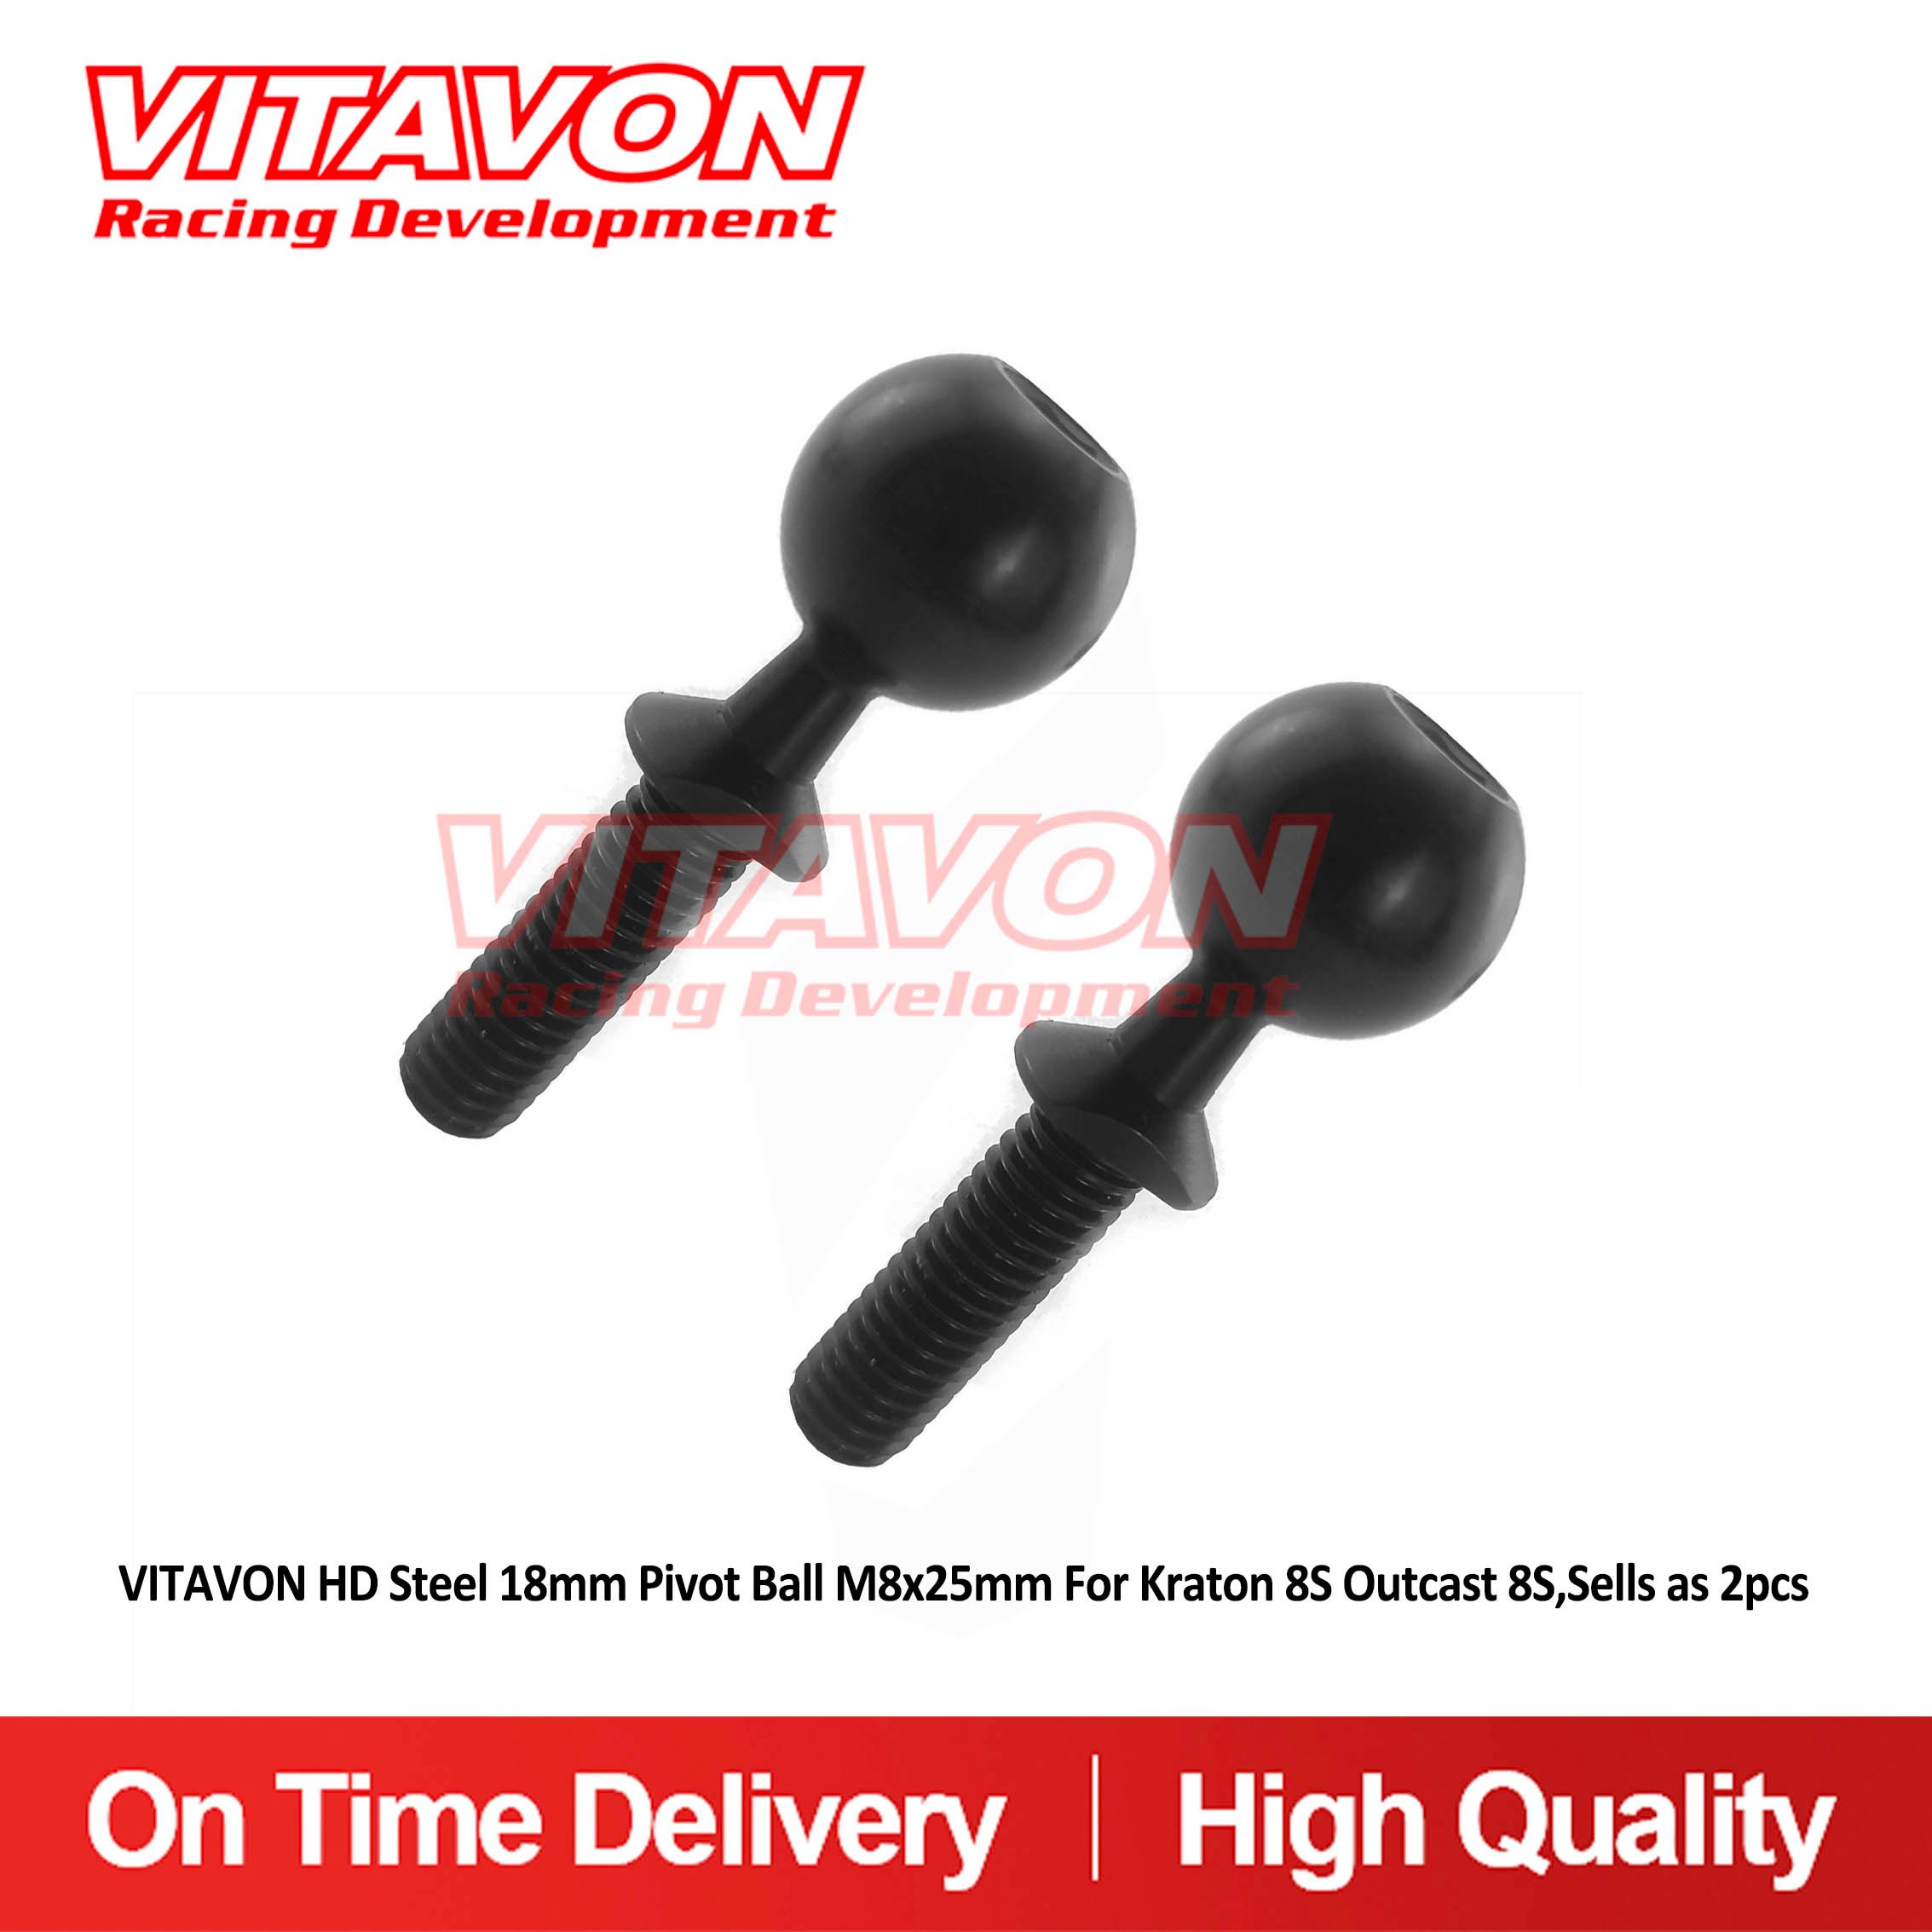 VITAVON HD Steel 18mm Pivot Ball M8x25mm For Arrma Kraton 8S Outcast 8s,Sells as 2pcs